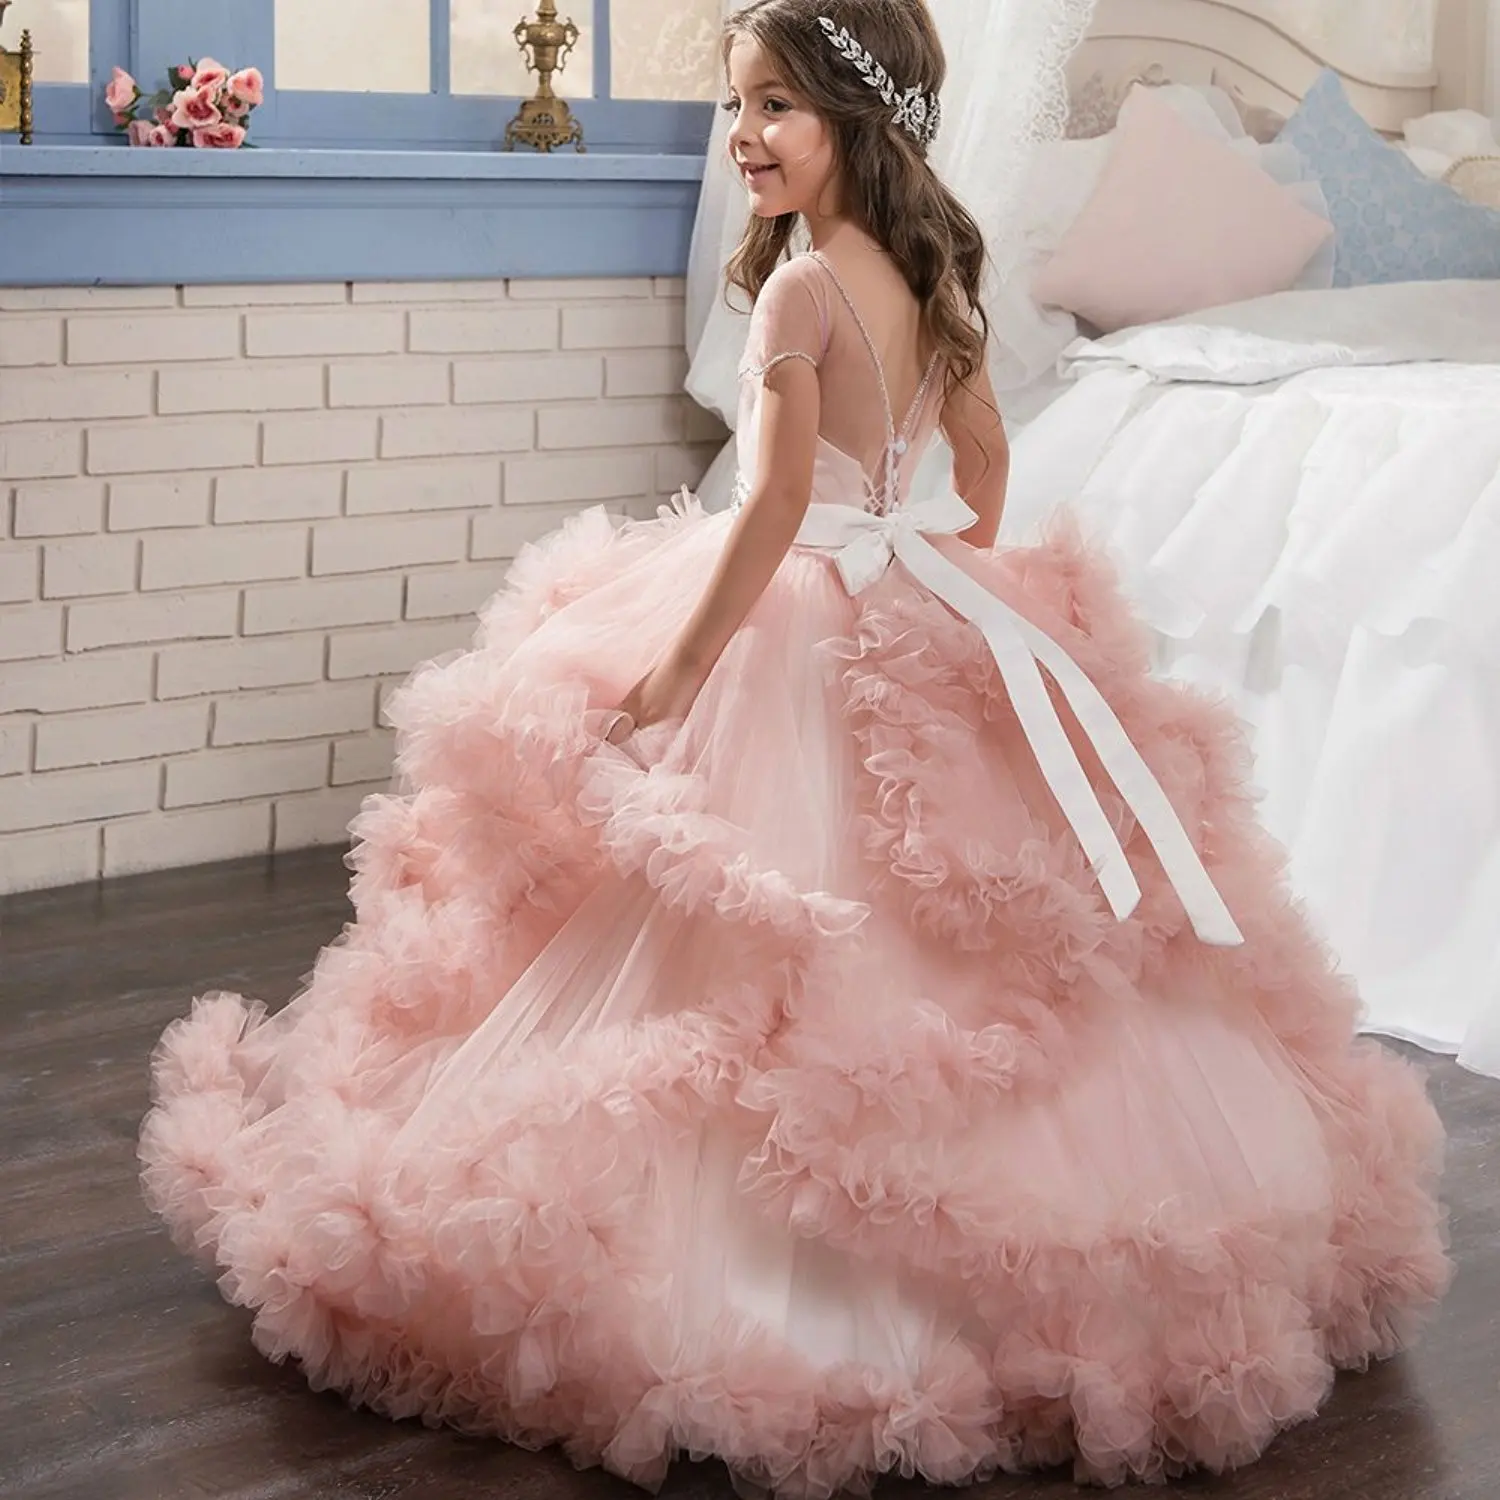 21 New Modle Girl Dress Kids Cotton Frocks Design Wholesale Children Frocks Designs Buy Tulle Prom Gown Dress Girls Tulle Skirt Tulle Long Skirt Product On Alibaba Com